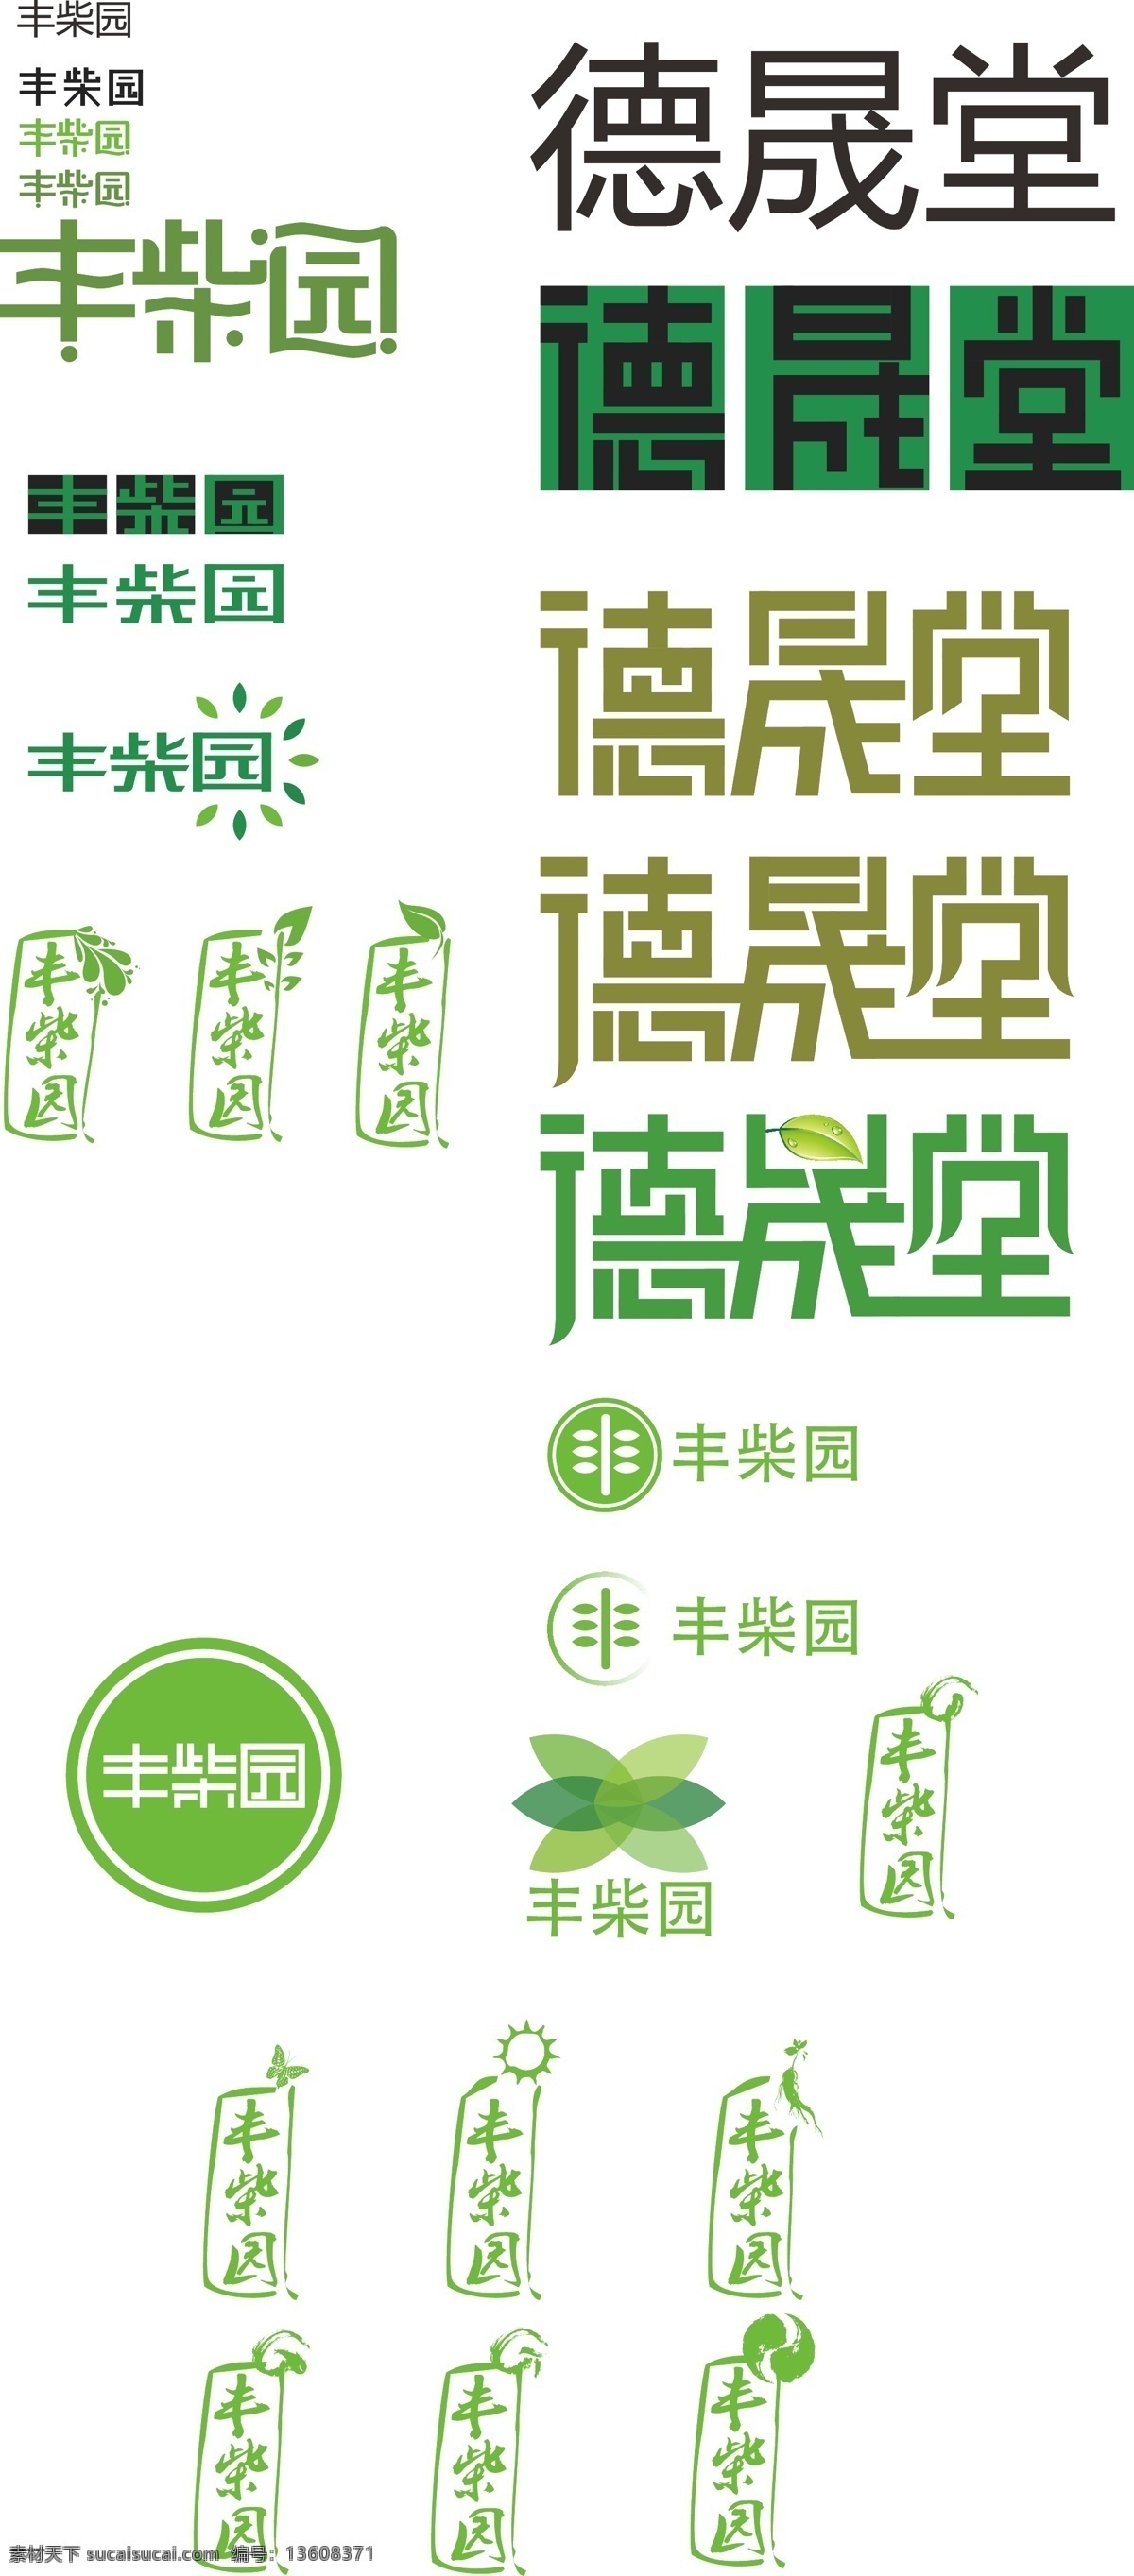 logo 演变 过程 文件 古典 绿色 文字 中国风 原创设计 其他原创设计